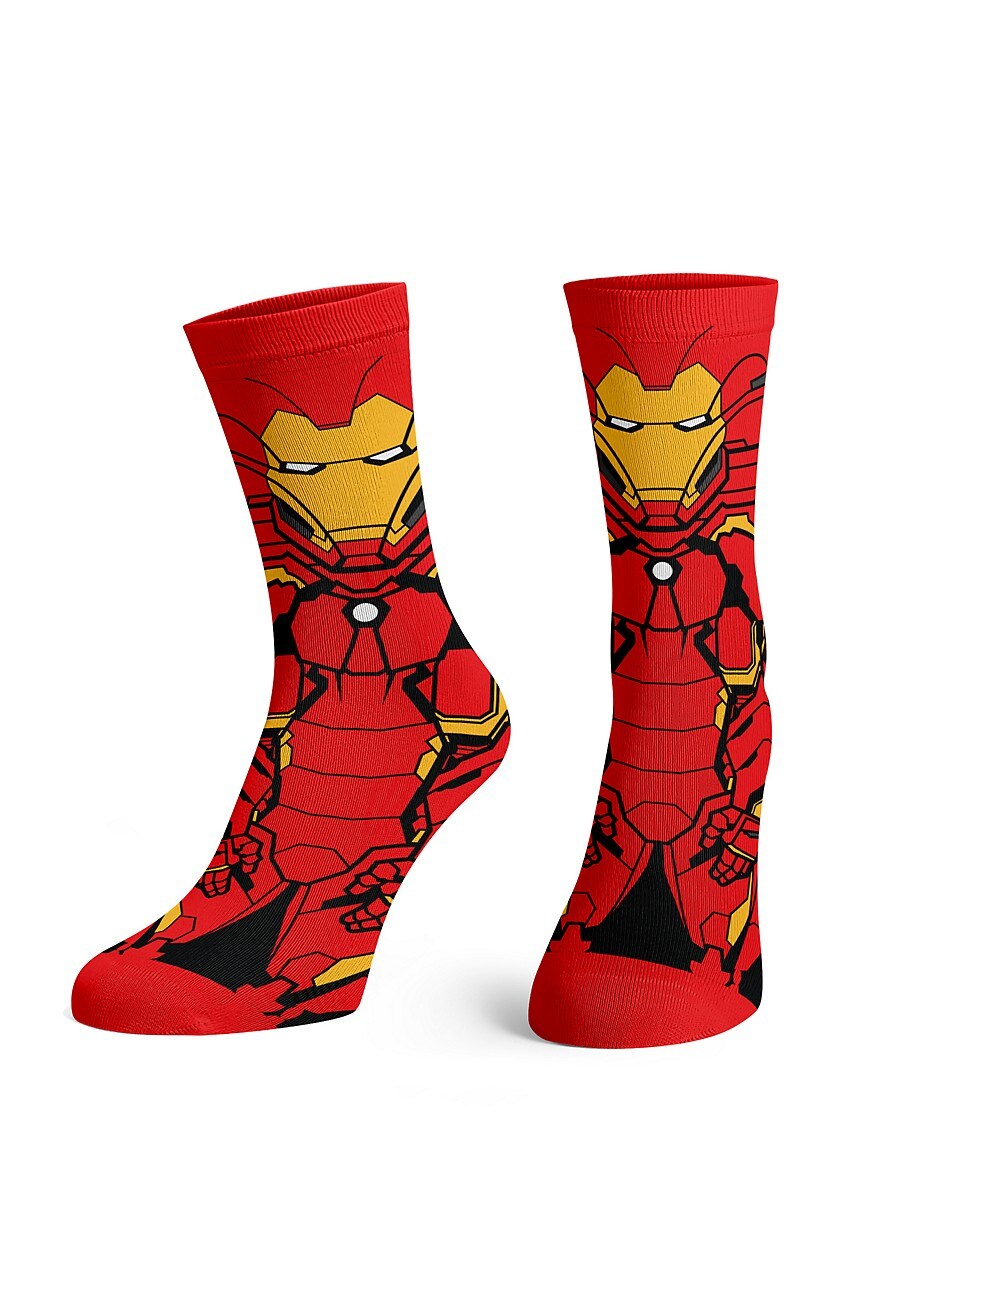 Superhero Socks -  Canada